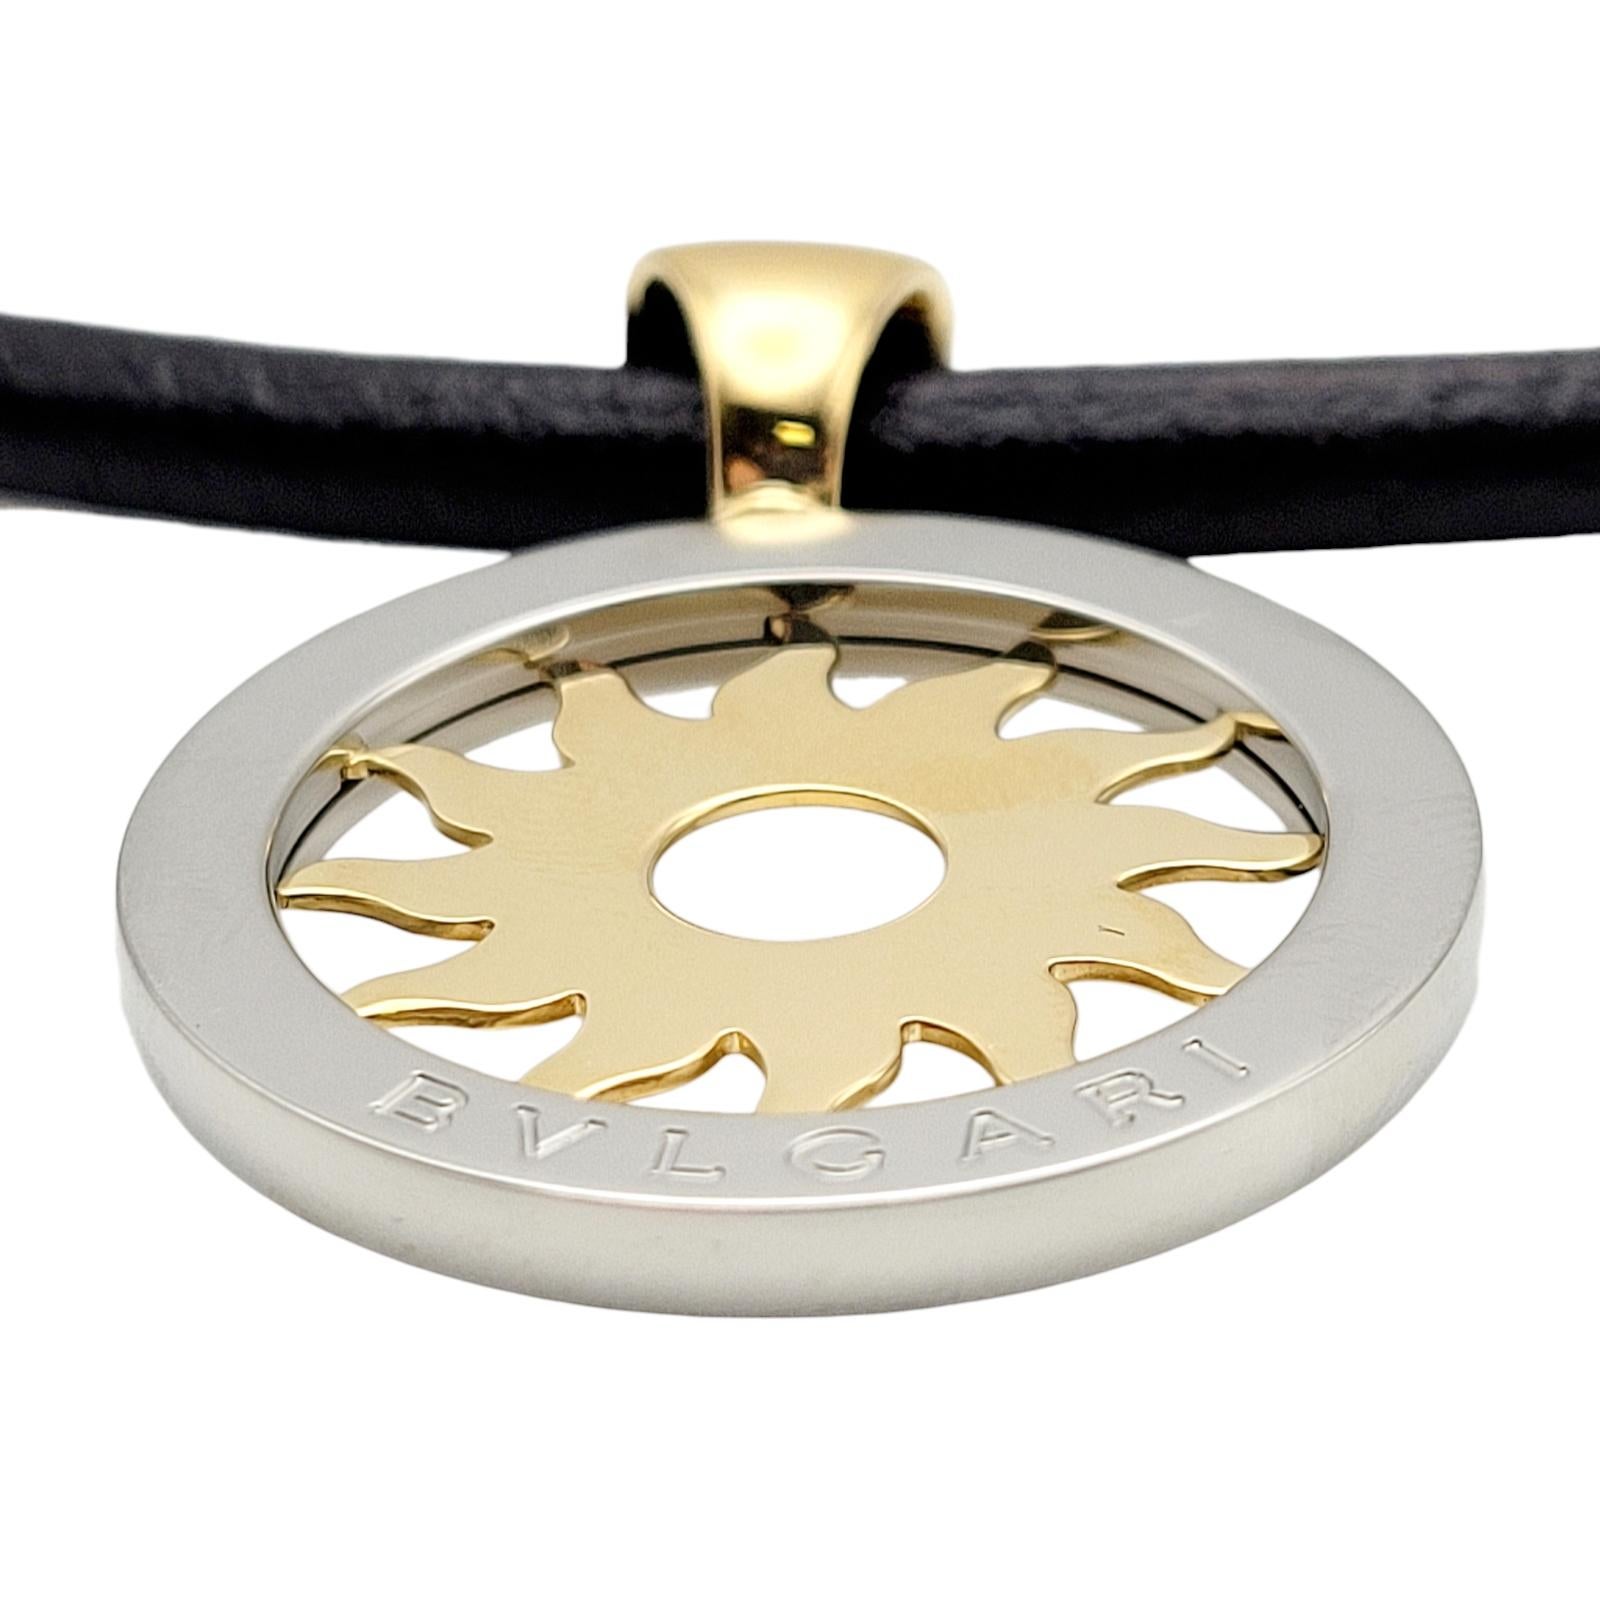 Women's Bulgari Tondo Sun Pendant Leather Necklace in 18k Yellow Gold & Stainless Steel